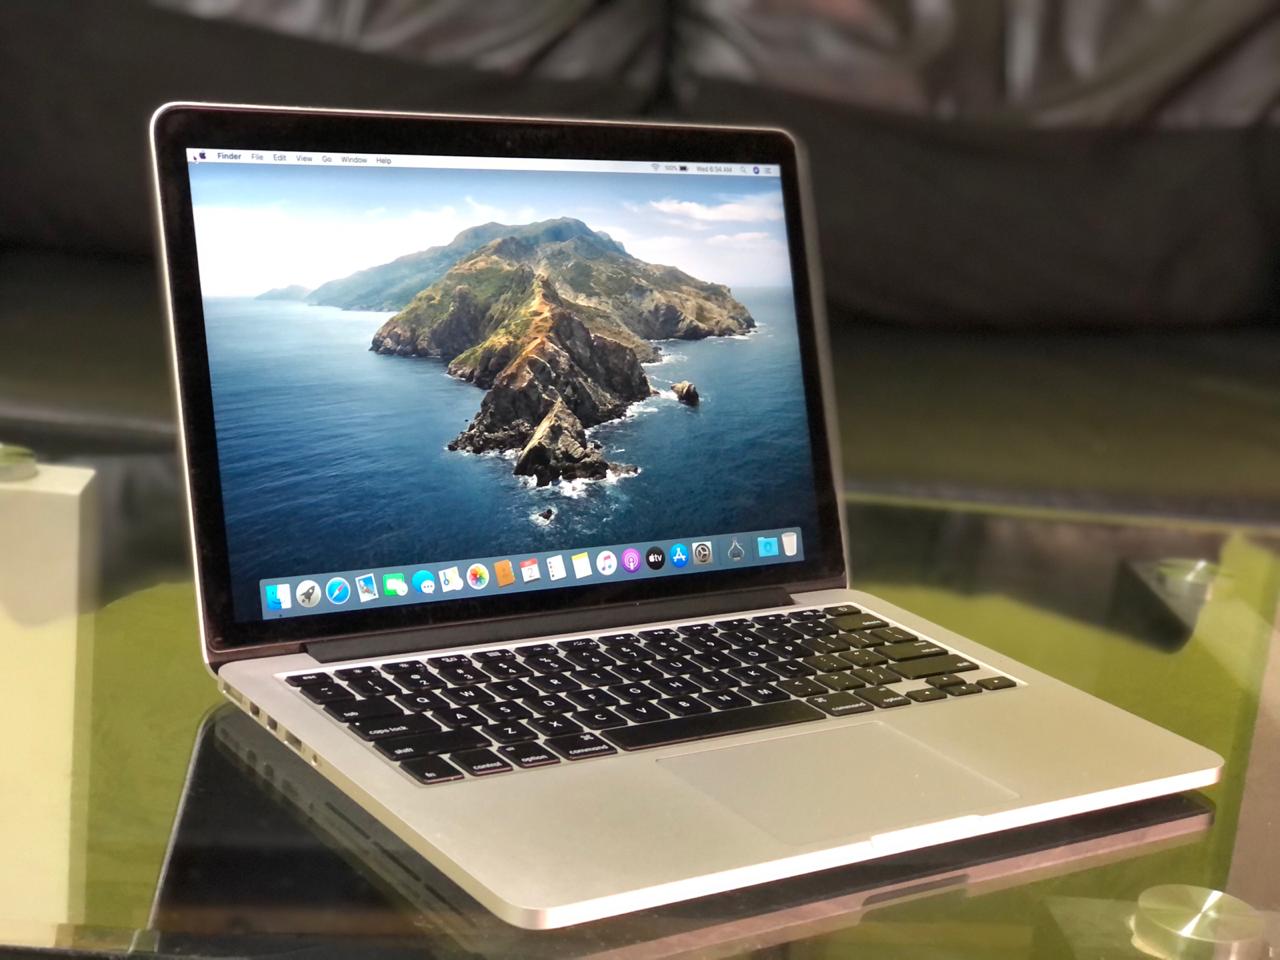 computadoras y laptops - MacBook Pro 2015-13 Pulg. i5 a 2.70 GHZ- 8 GB RAM- 128 GB SSD- Disco Sólido